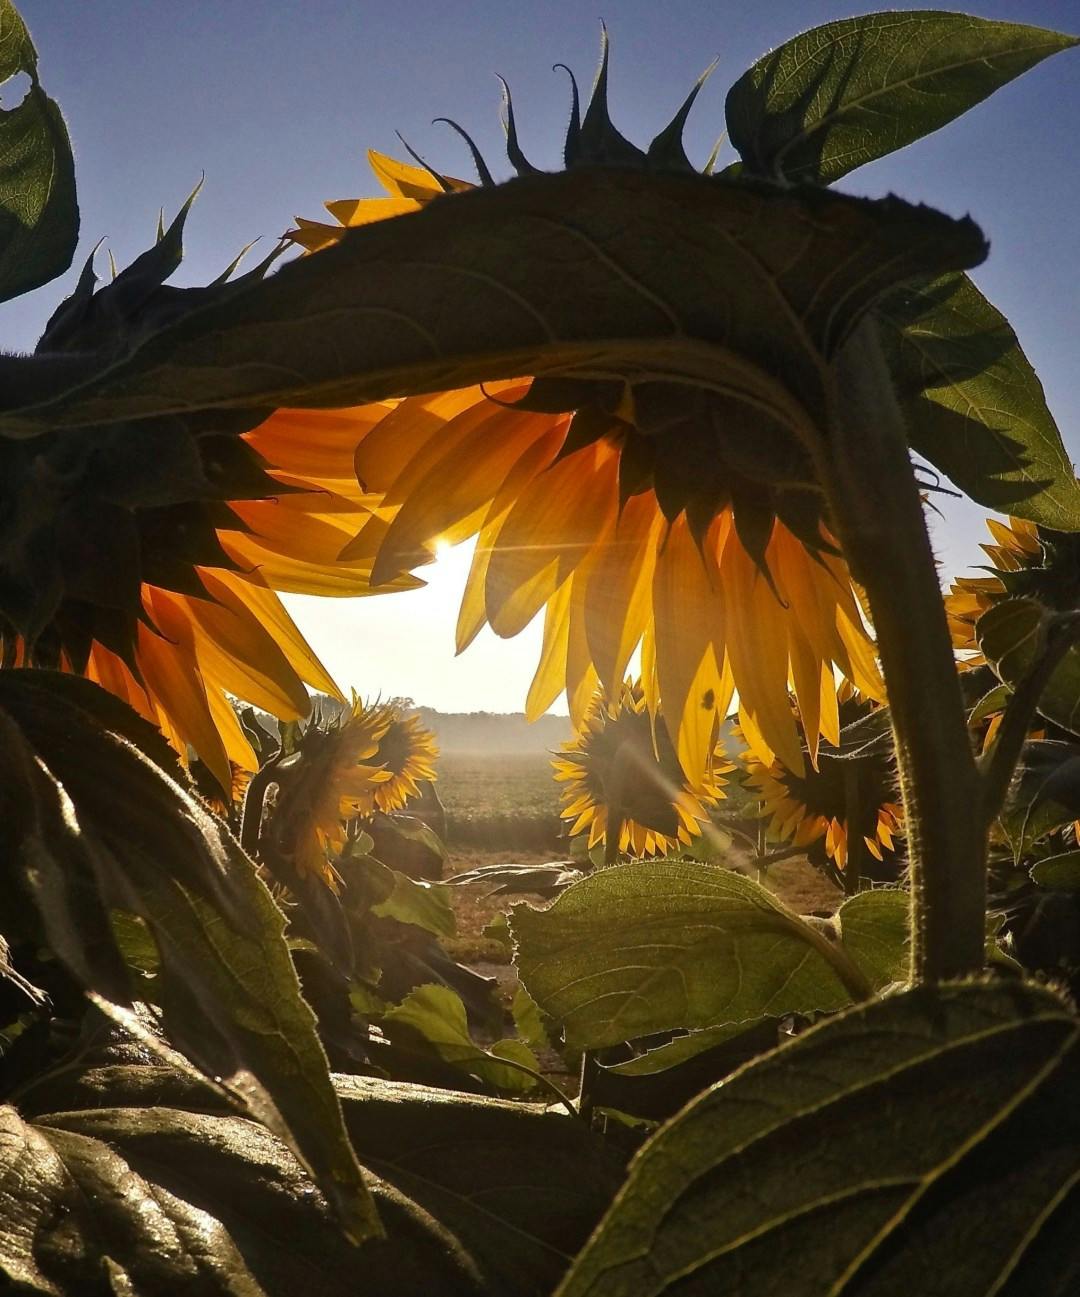 Sunflowers in Kansas